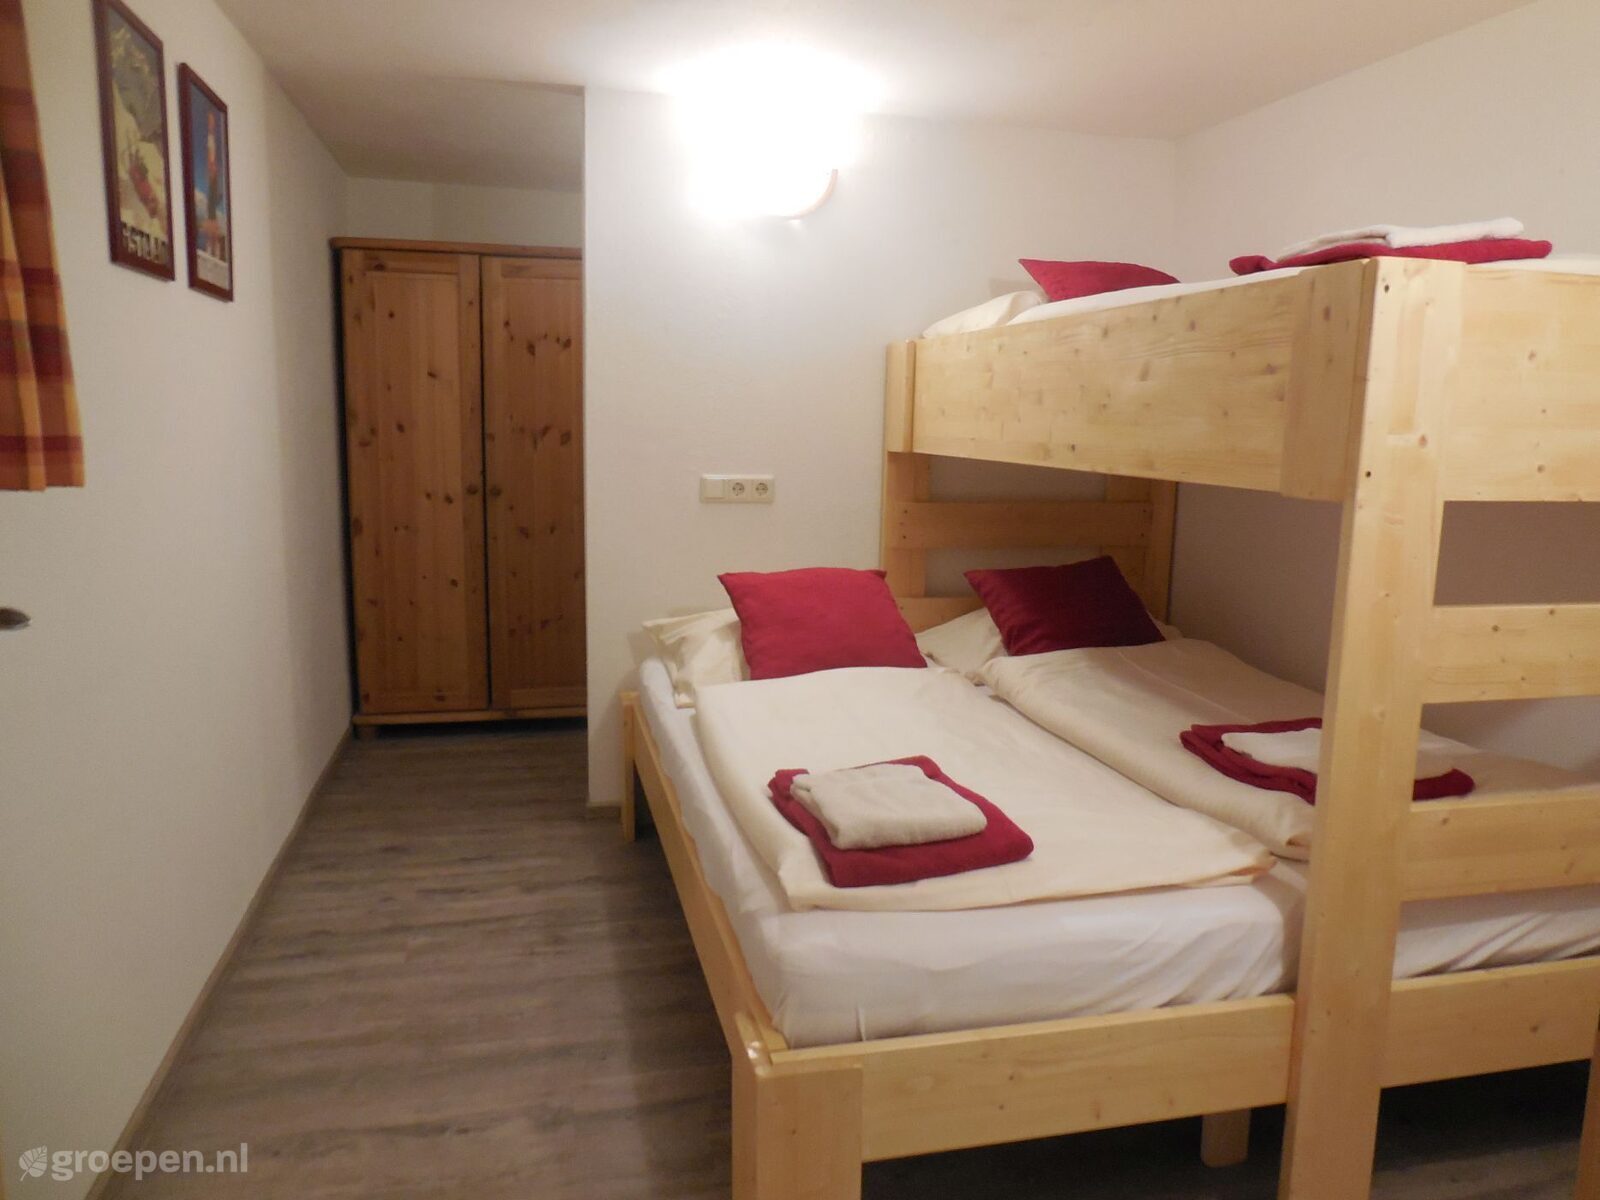 Group accommodation Piesendorf